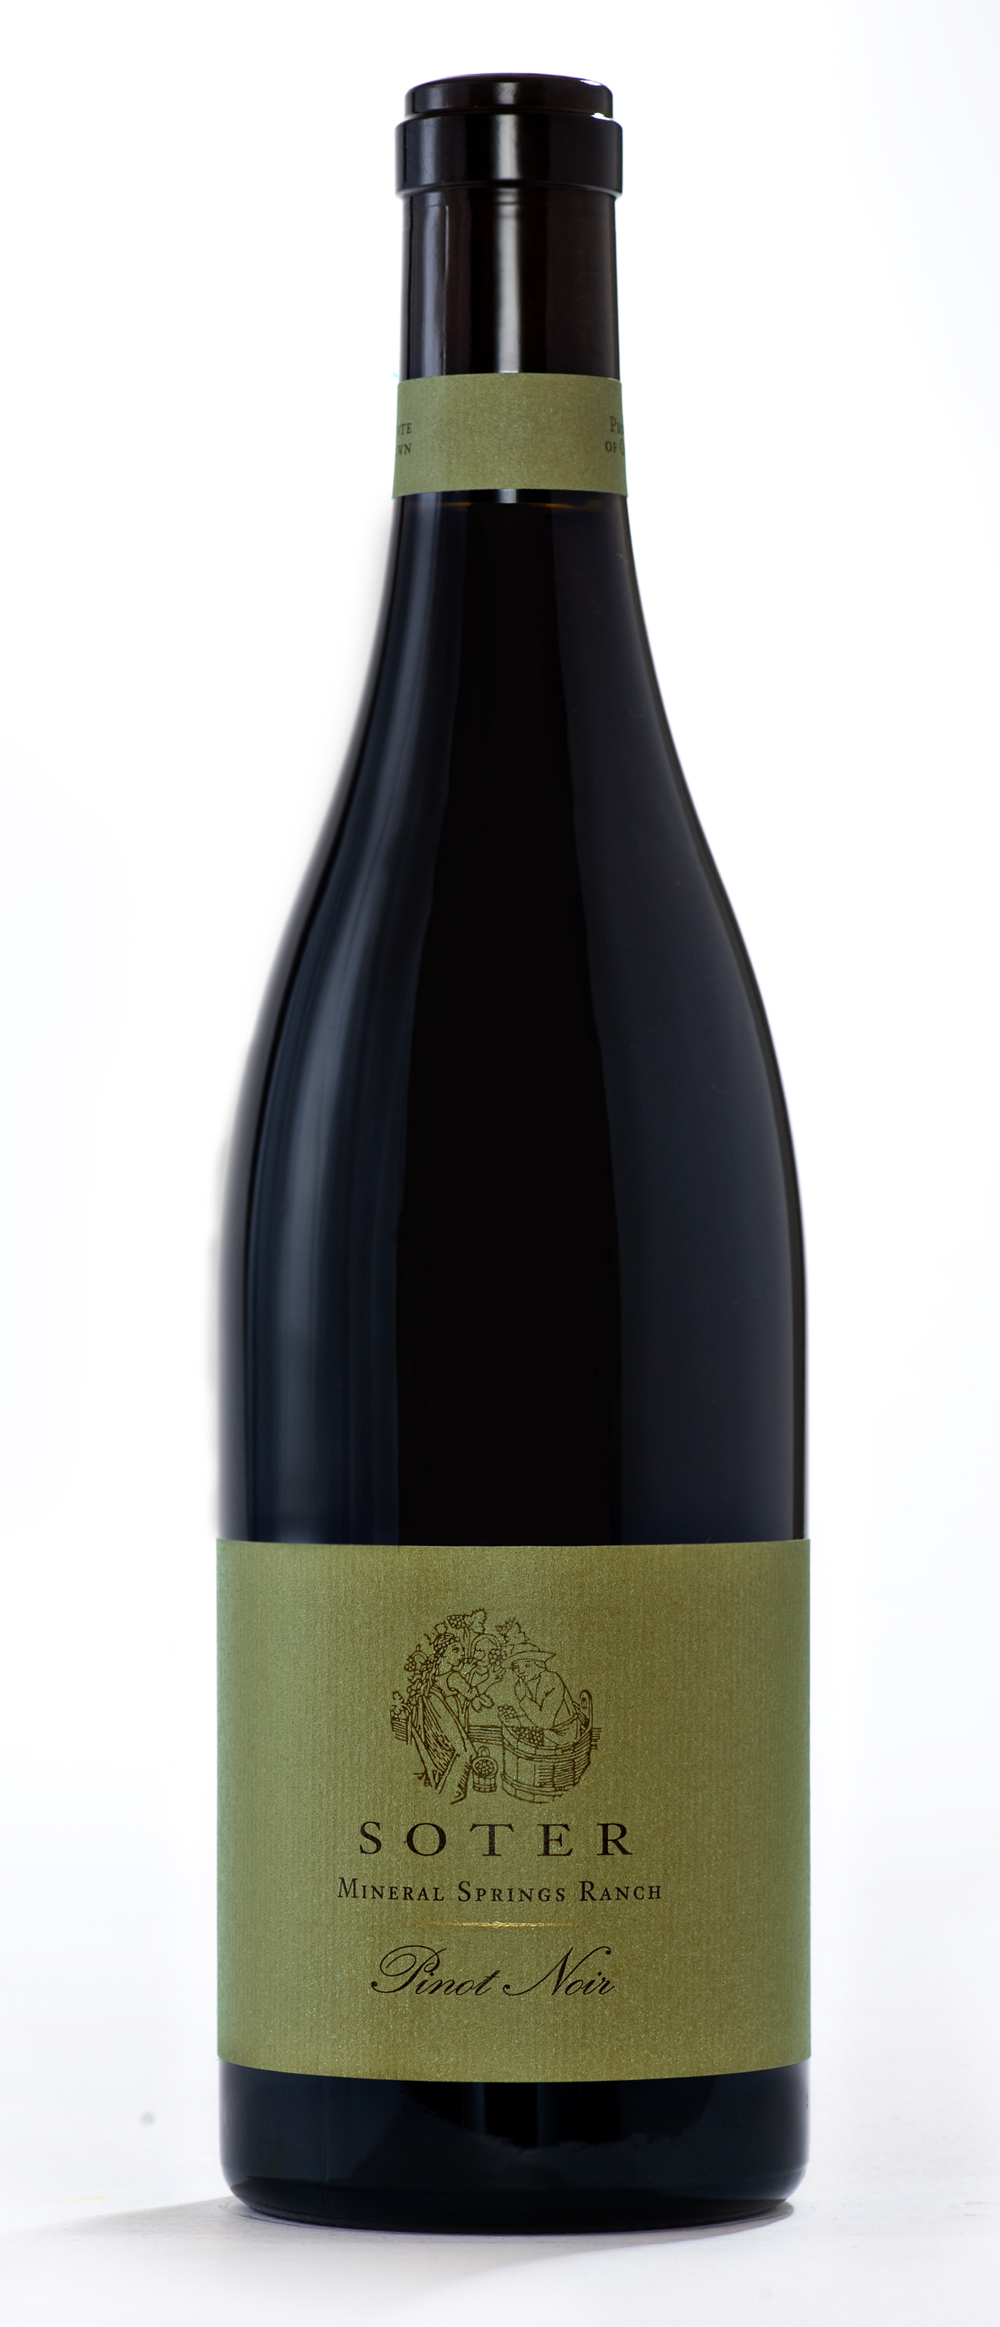 2012 Soter Pinot Noir Mineral Springs Willamette - click image for full description